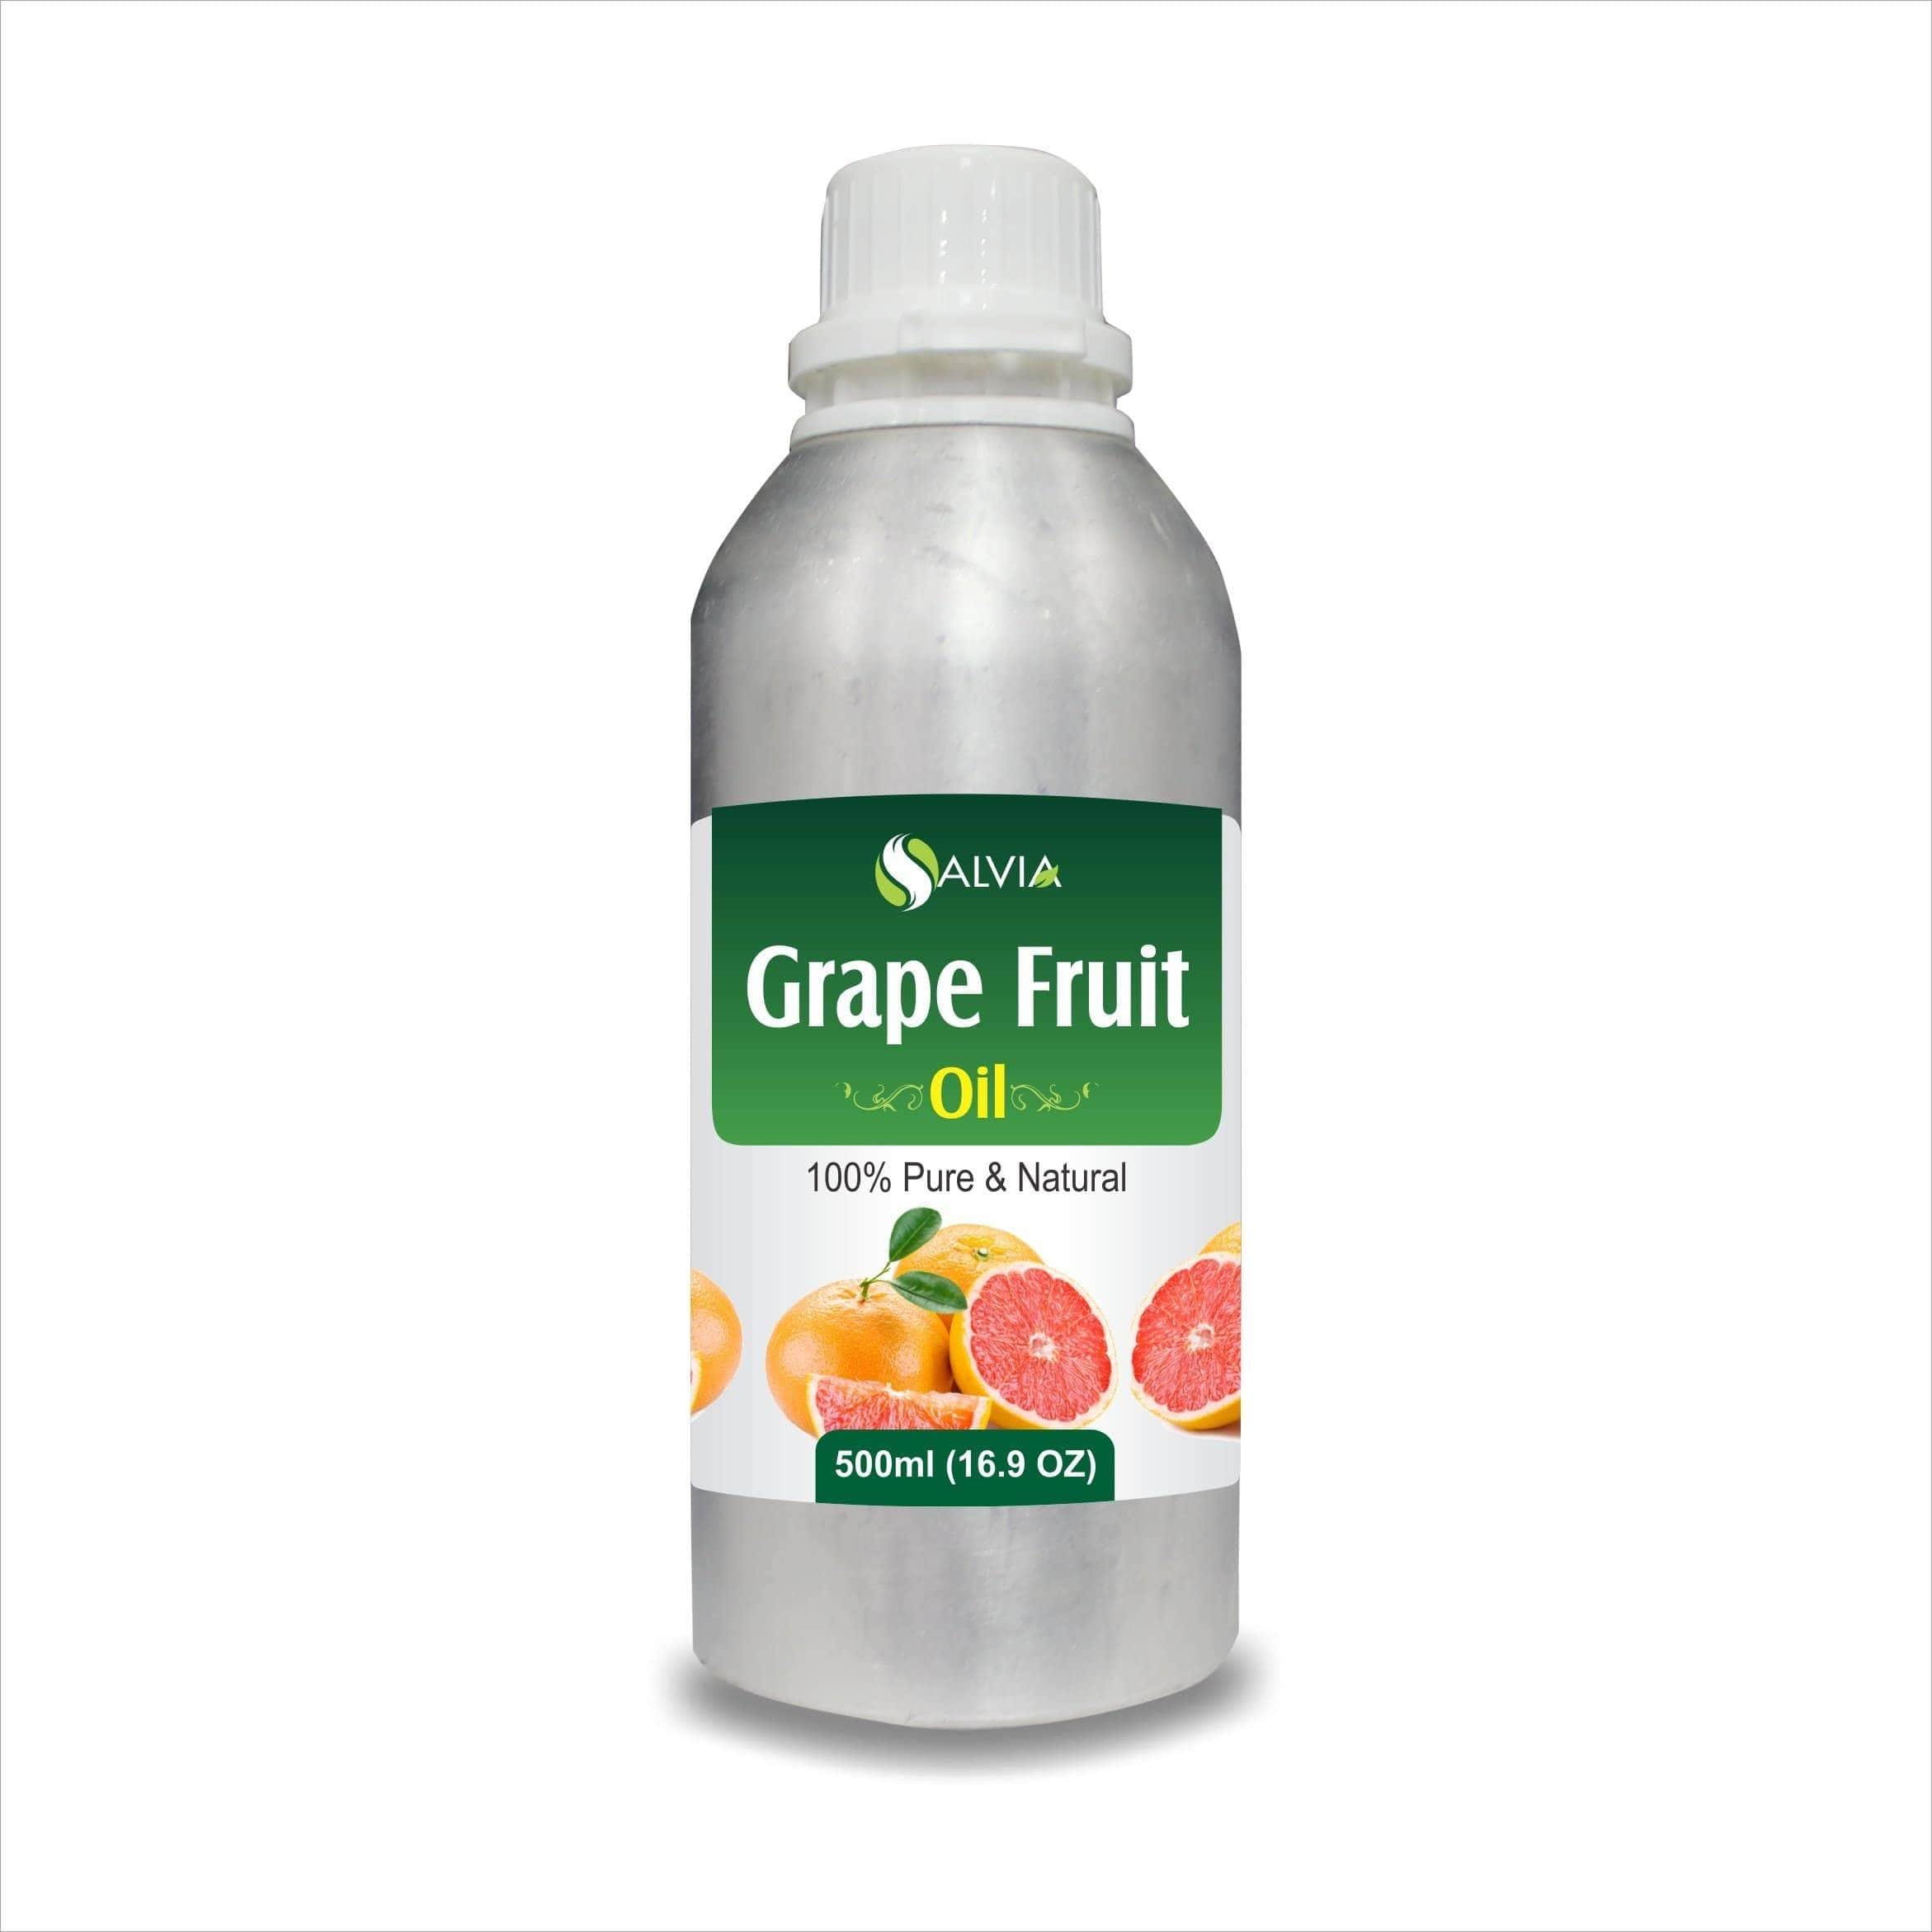 grapefruit oil benefits on skin